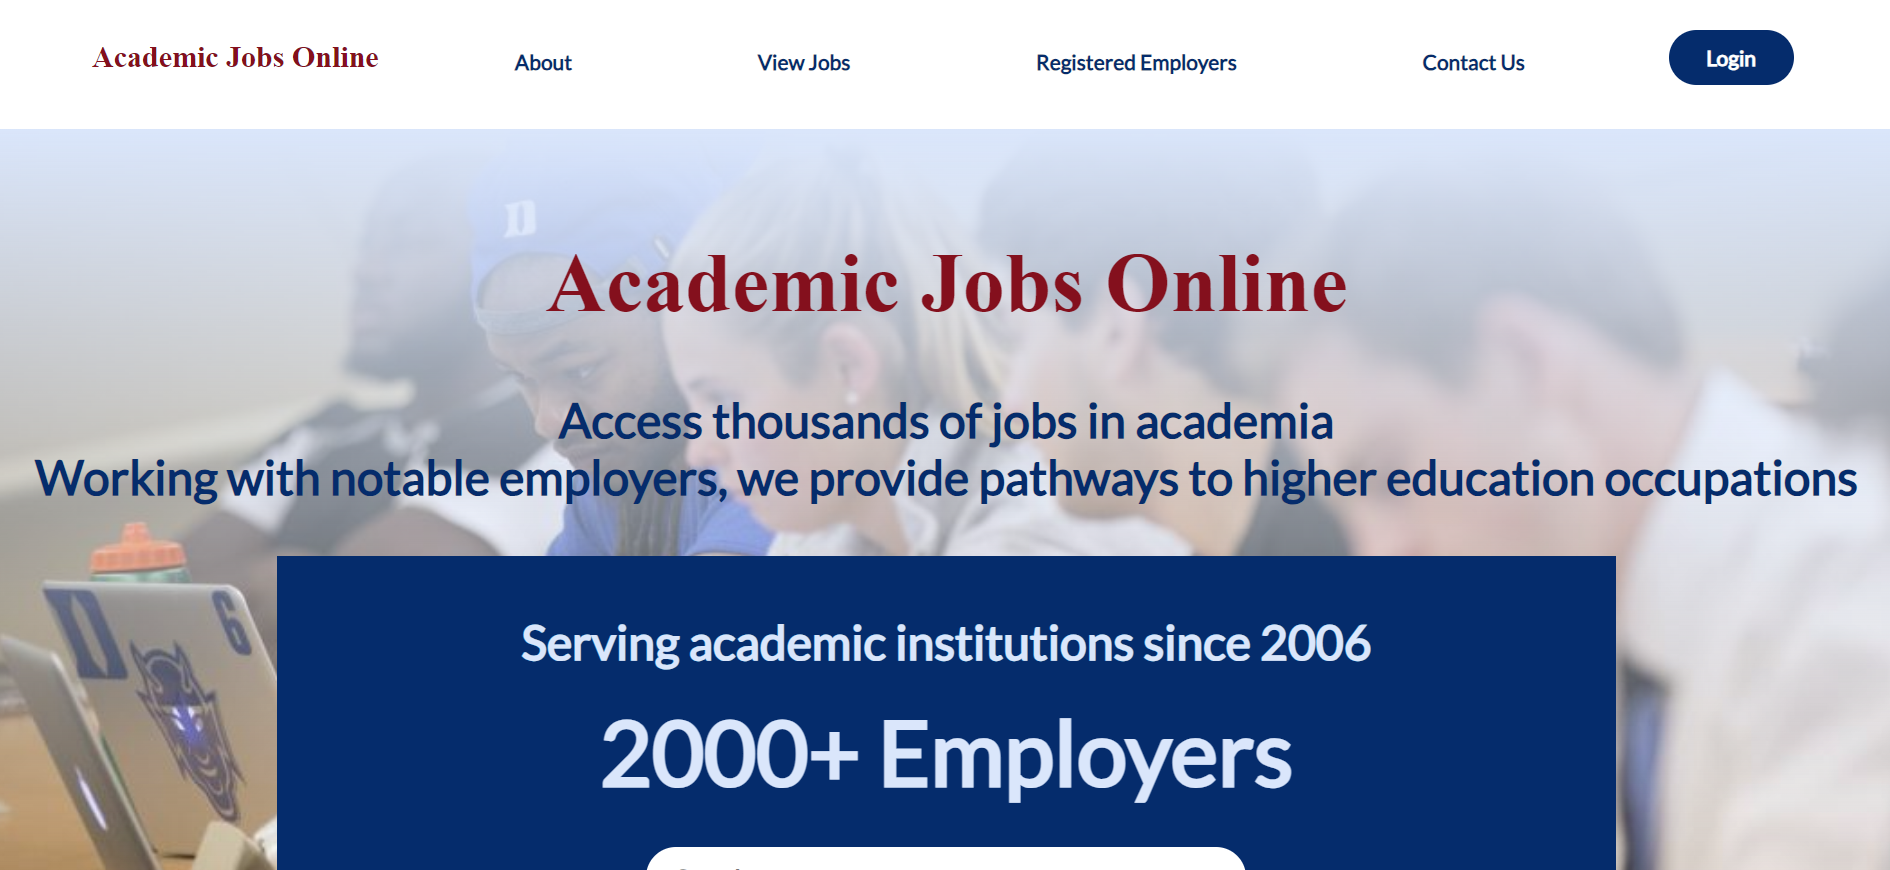 Academic Jobs Online Page